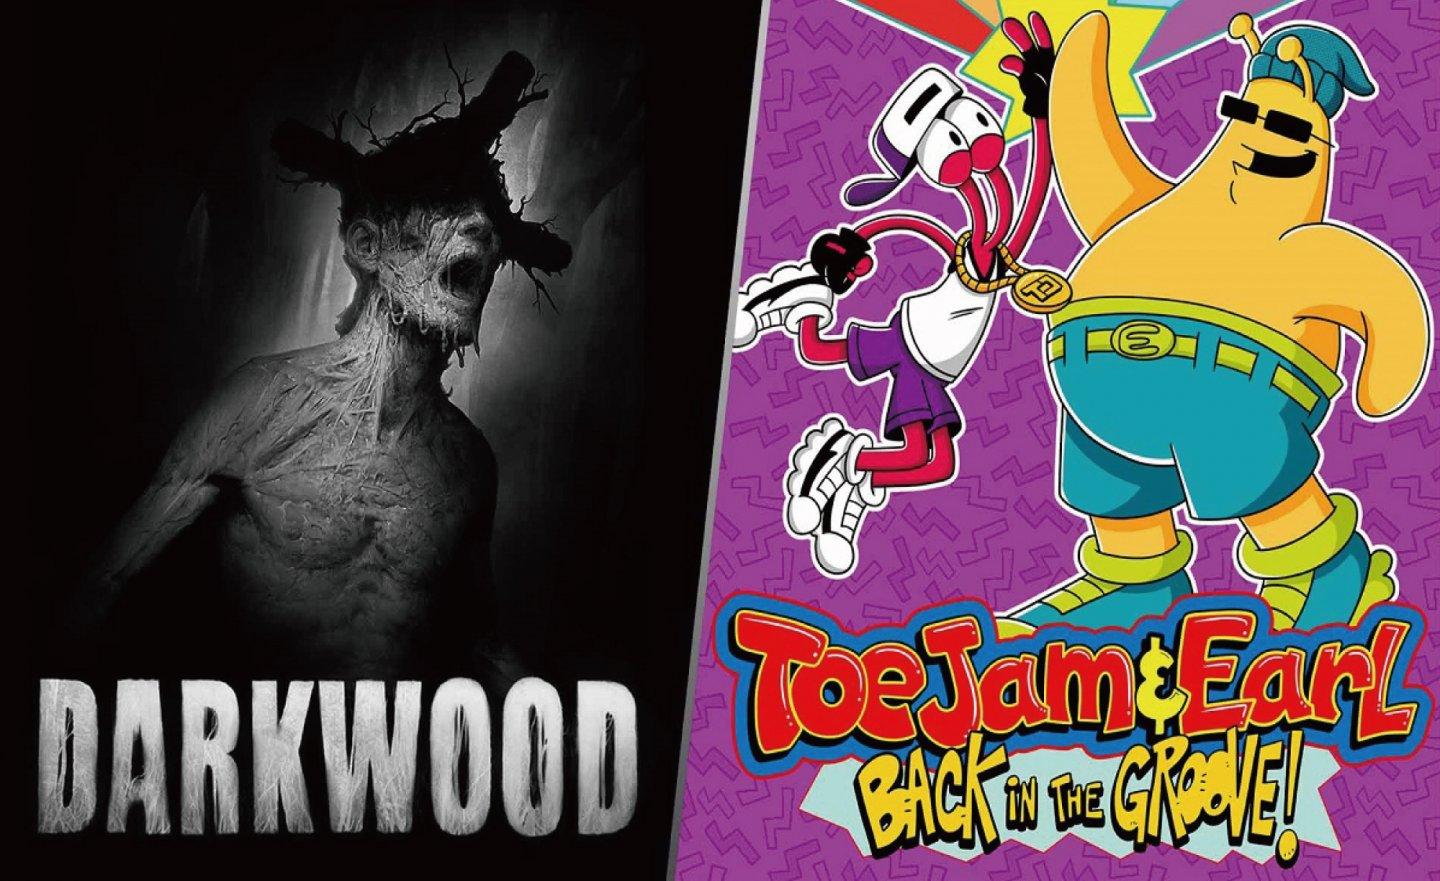 【限時免費】《Darkwood 陰暗森林》、《ToeJam & Earl: Back in the Groove!》兩款遊戲放送中，快搶在 2022 年 10 月 20 日 23:00 前領取